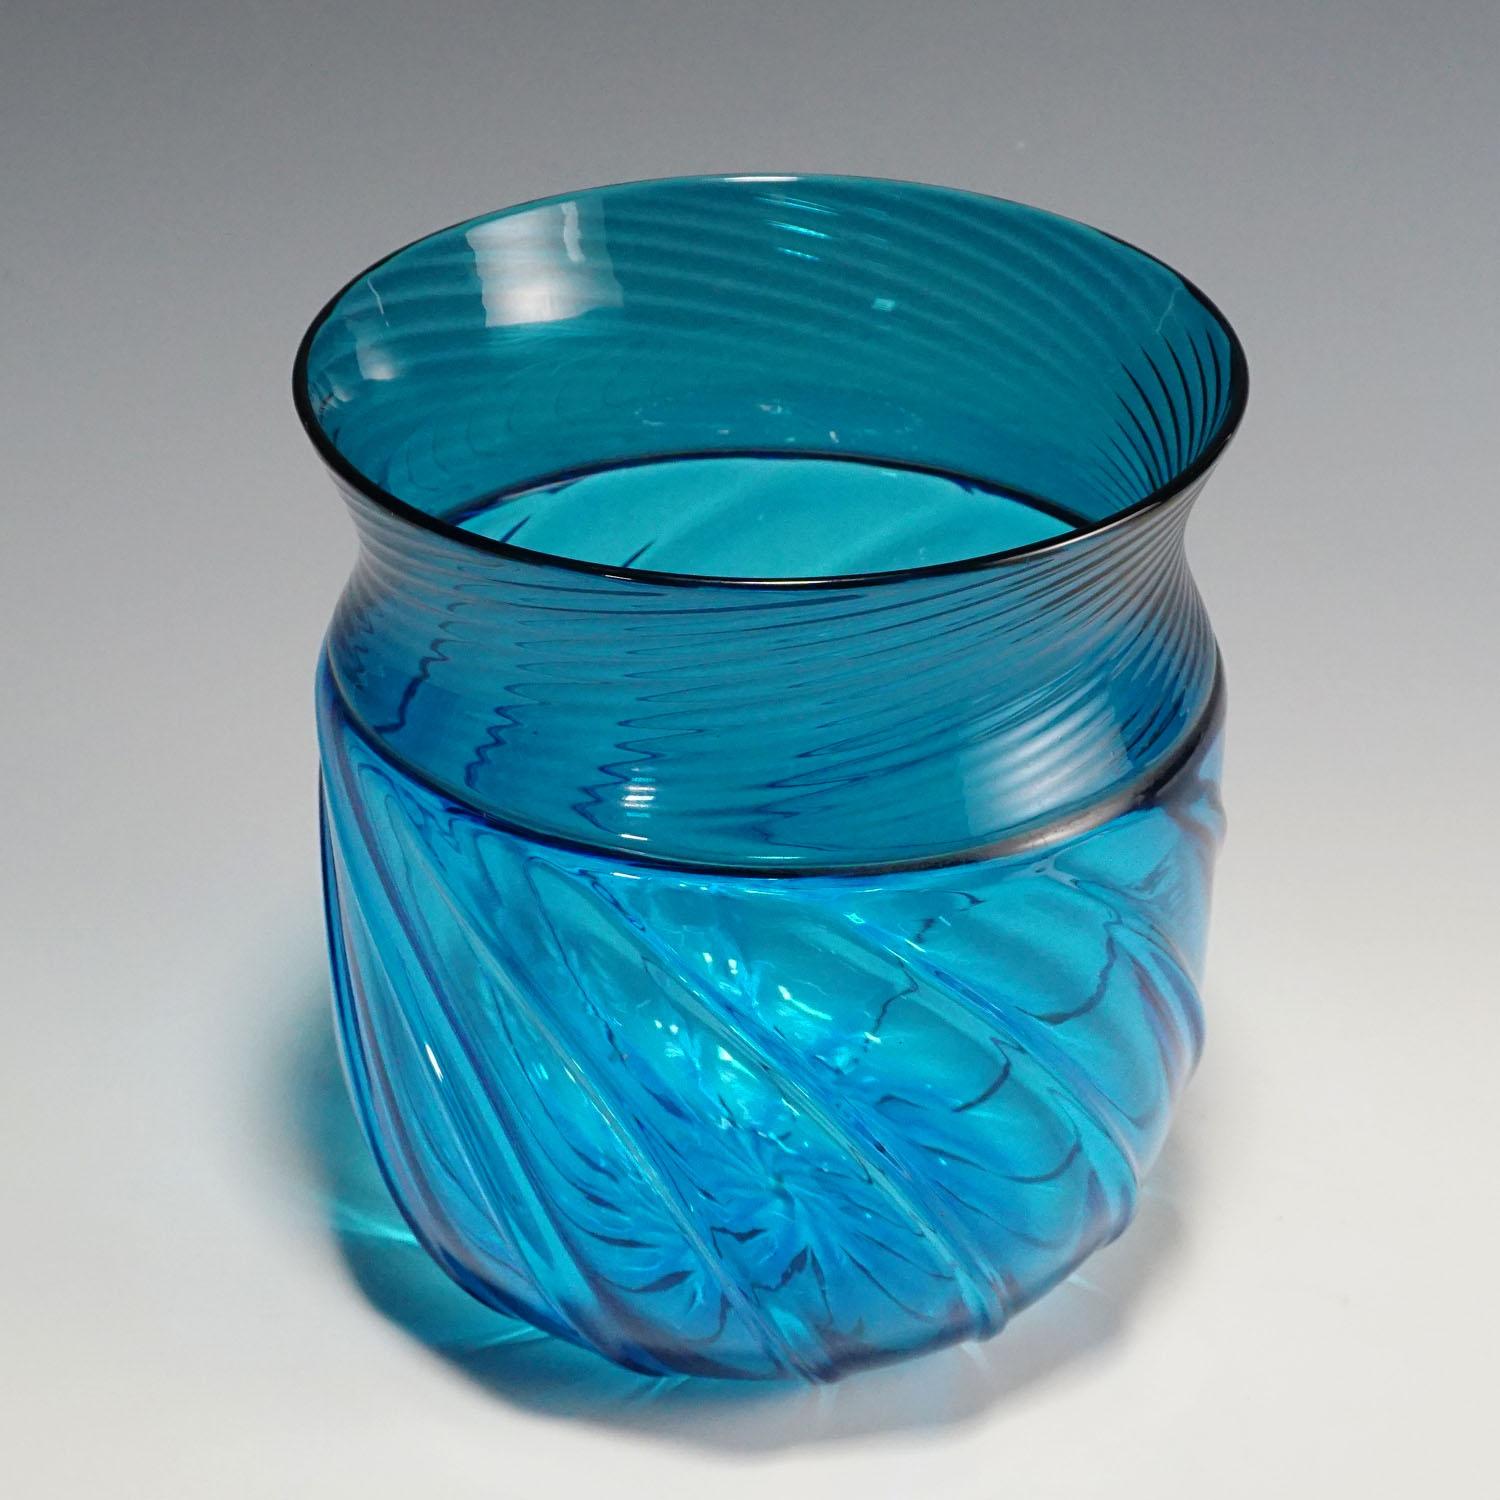 A vase of the opulus series designed by Brigitte Carlsson and Ove Thorssen for Venini, 1972. Ribbed blue glass fused in incalmo technic. Venini, Murano, circa 1970s. incised signature Venini Italia on the base.
Measures: Height 7.87